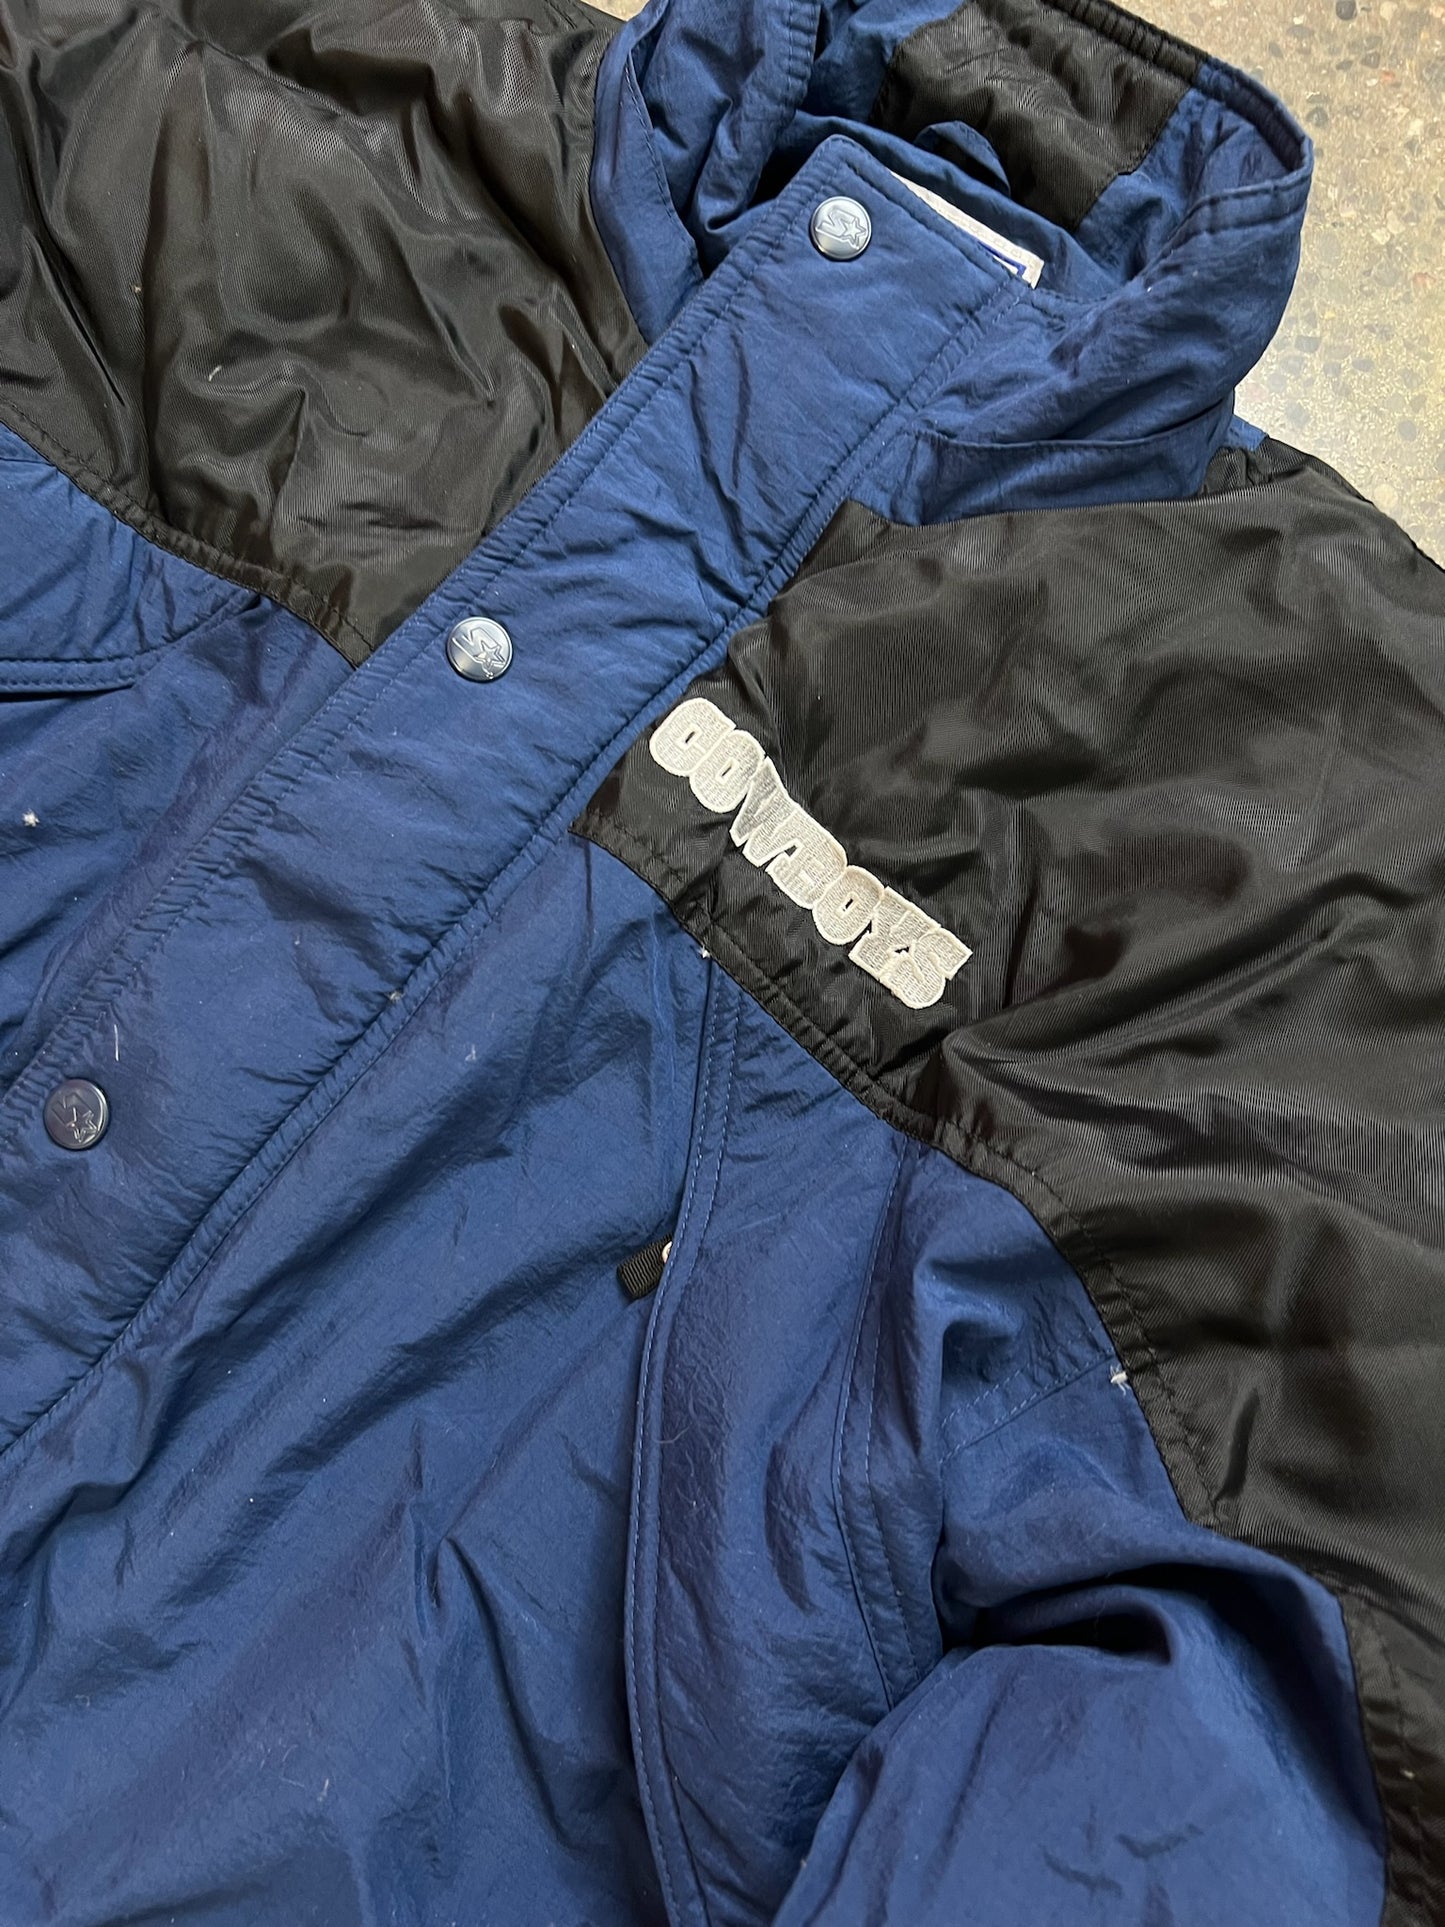 Vintage Dallas Cowboys Starter Jacket Size XL